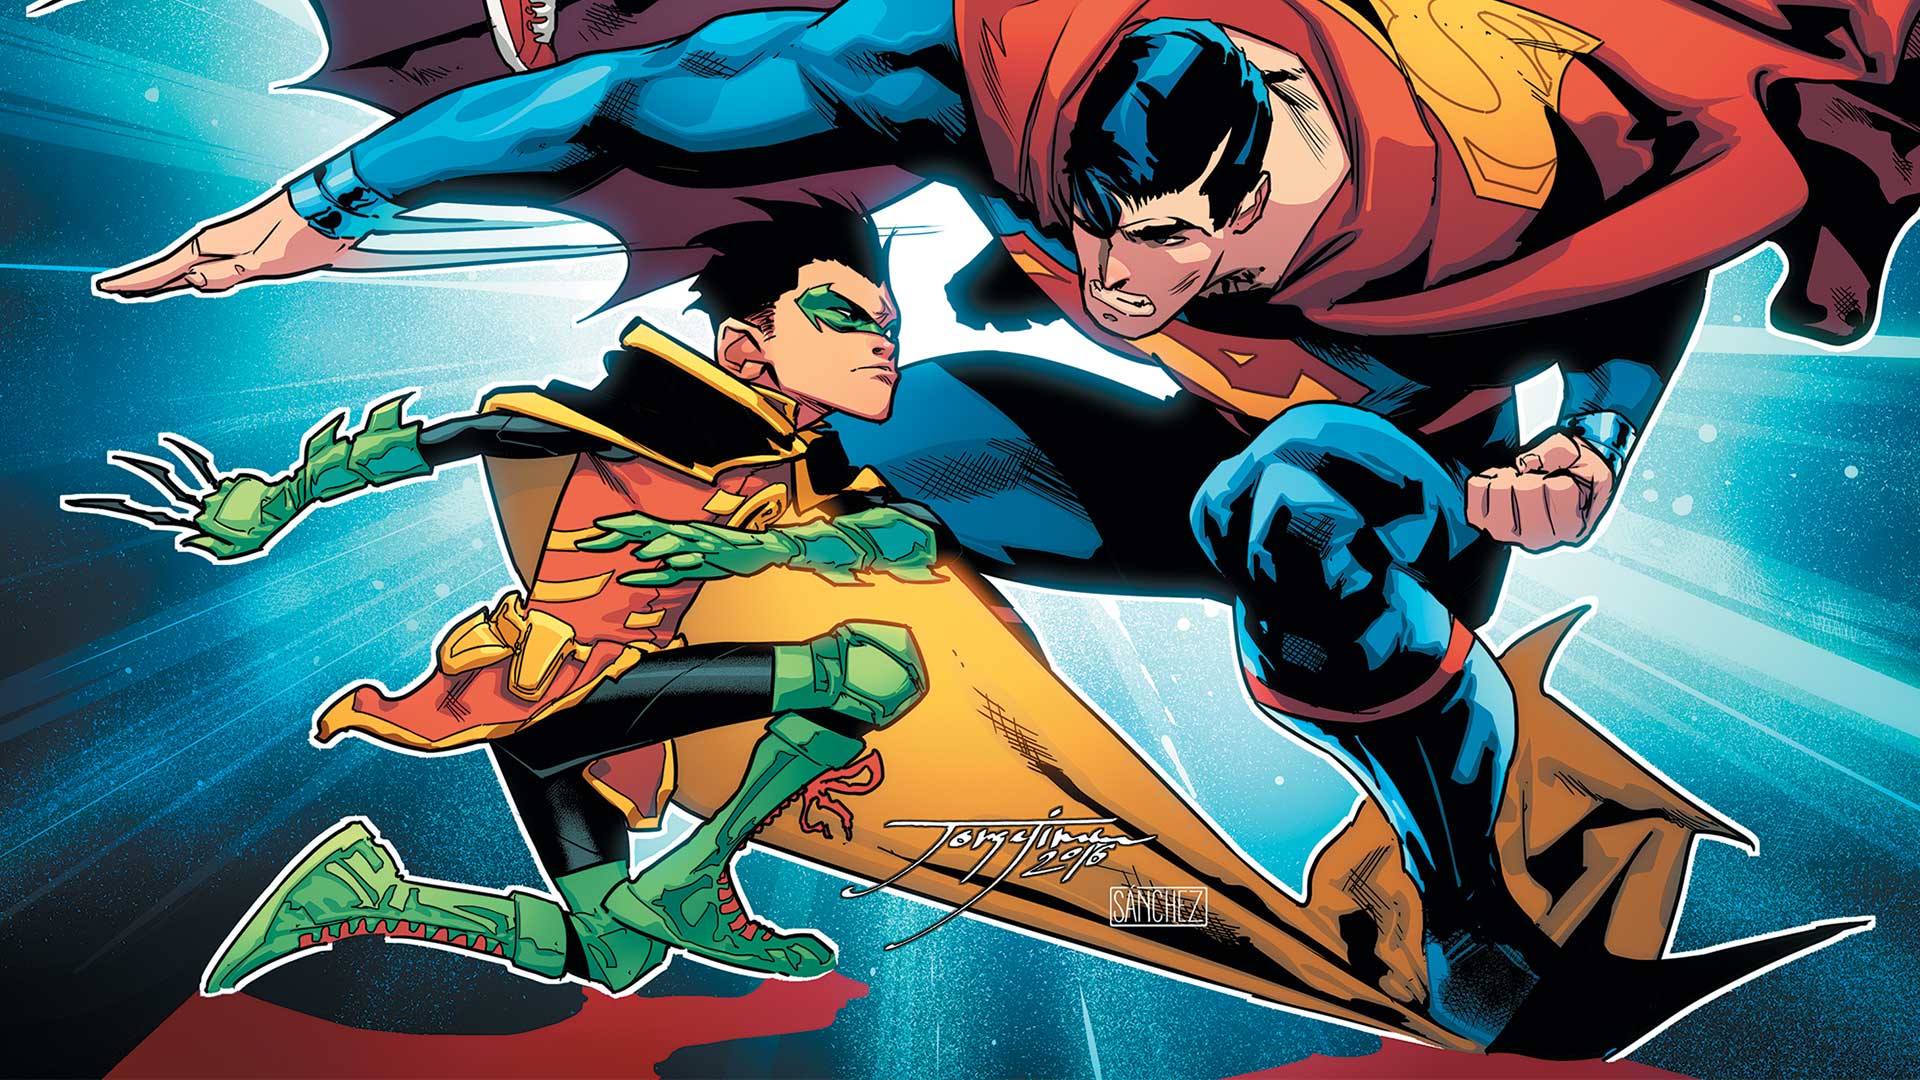 Comics Super-Sons HD Wallpaper | Background Image